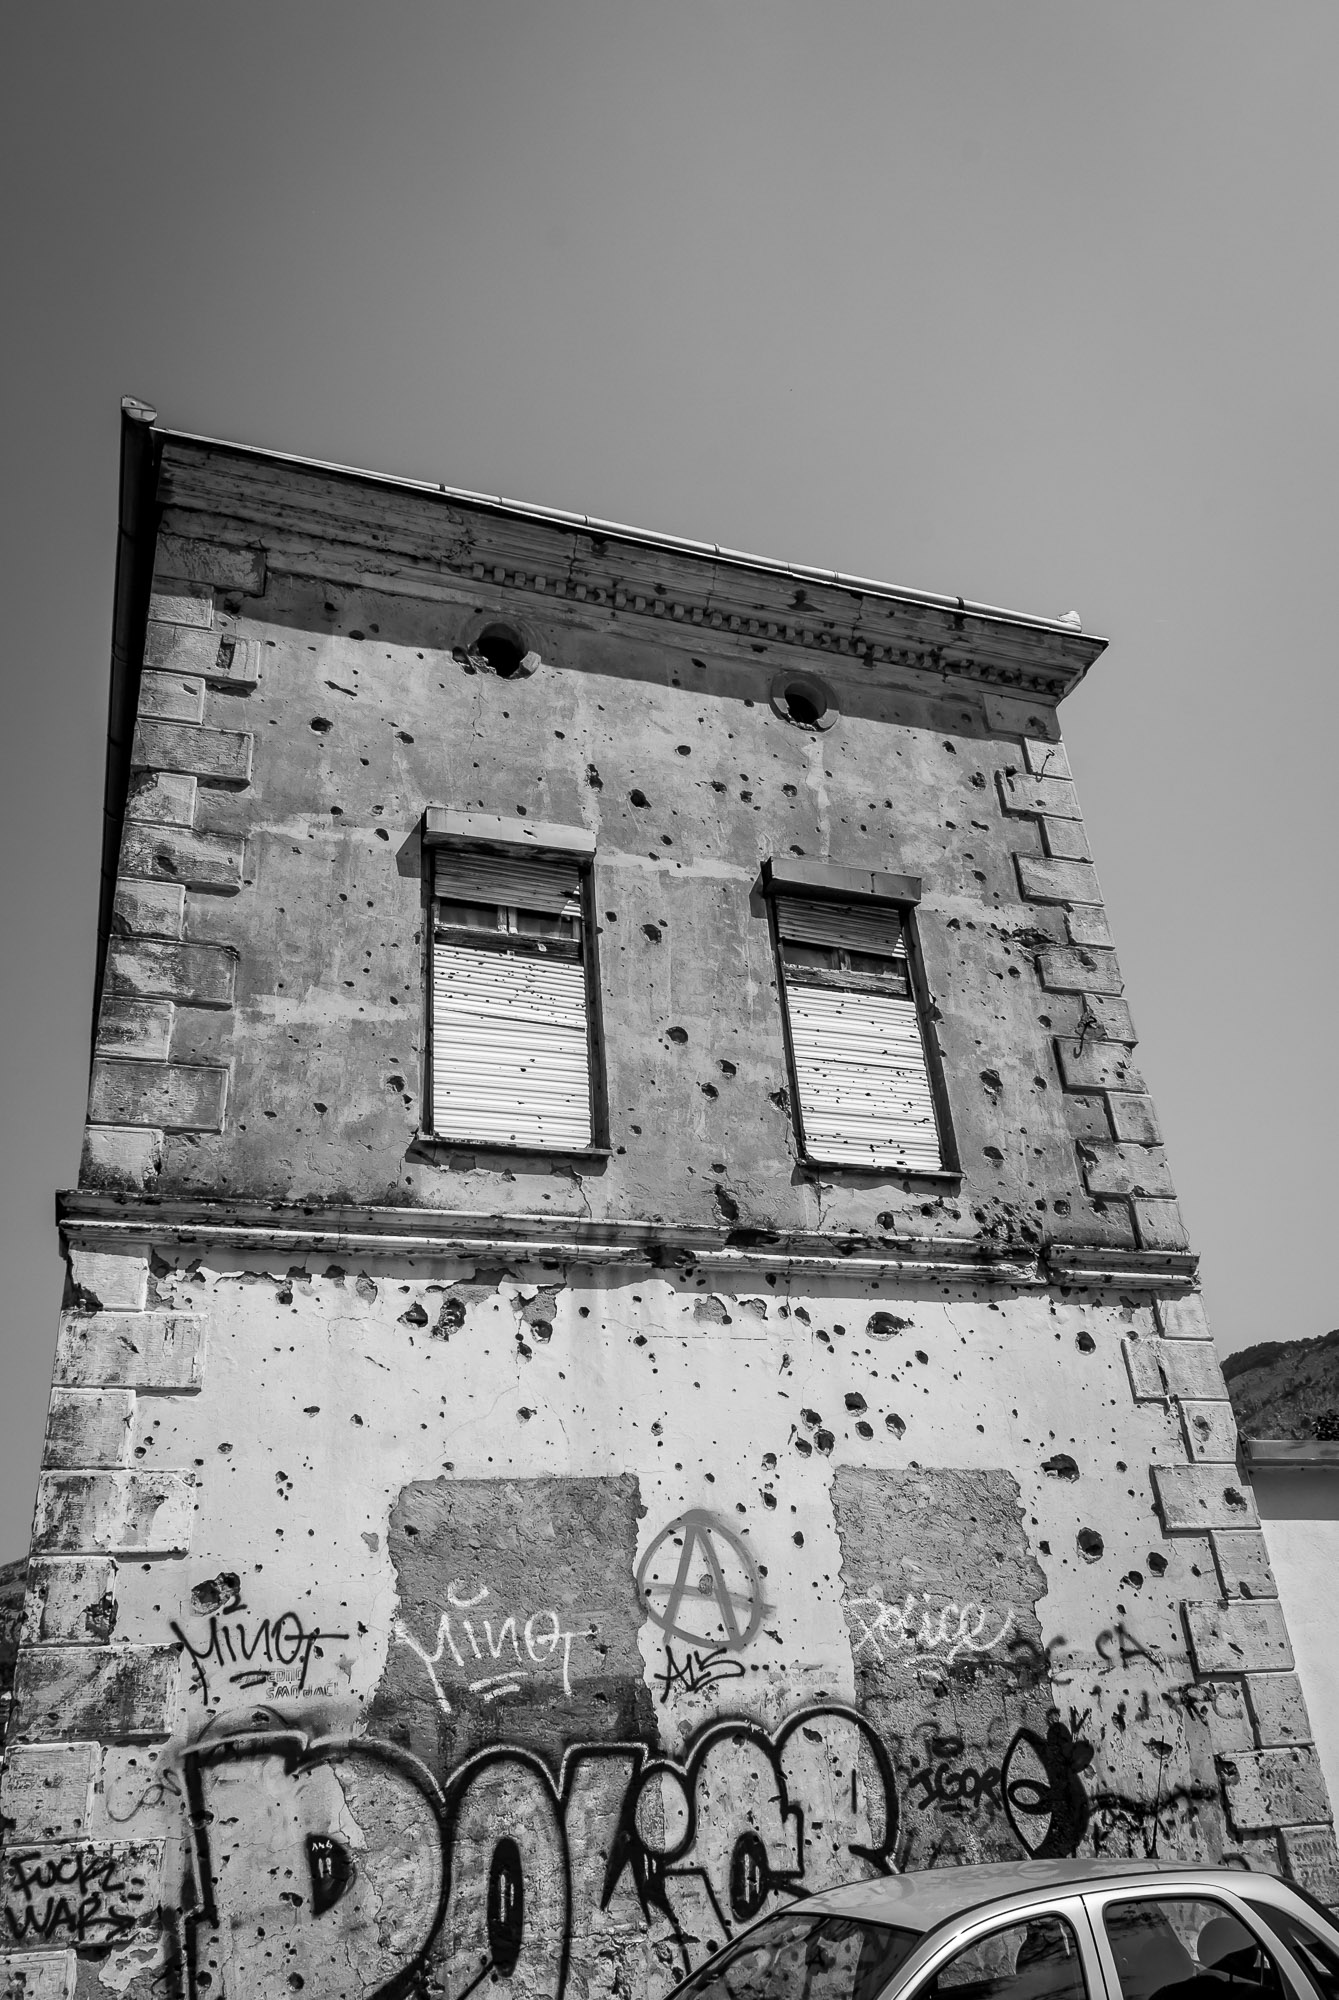 Mostar bullet hole building